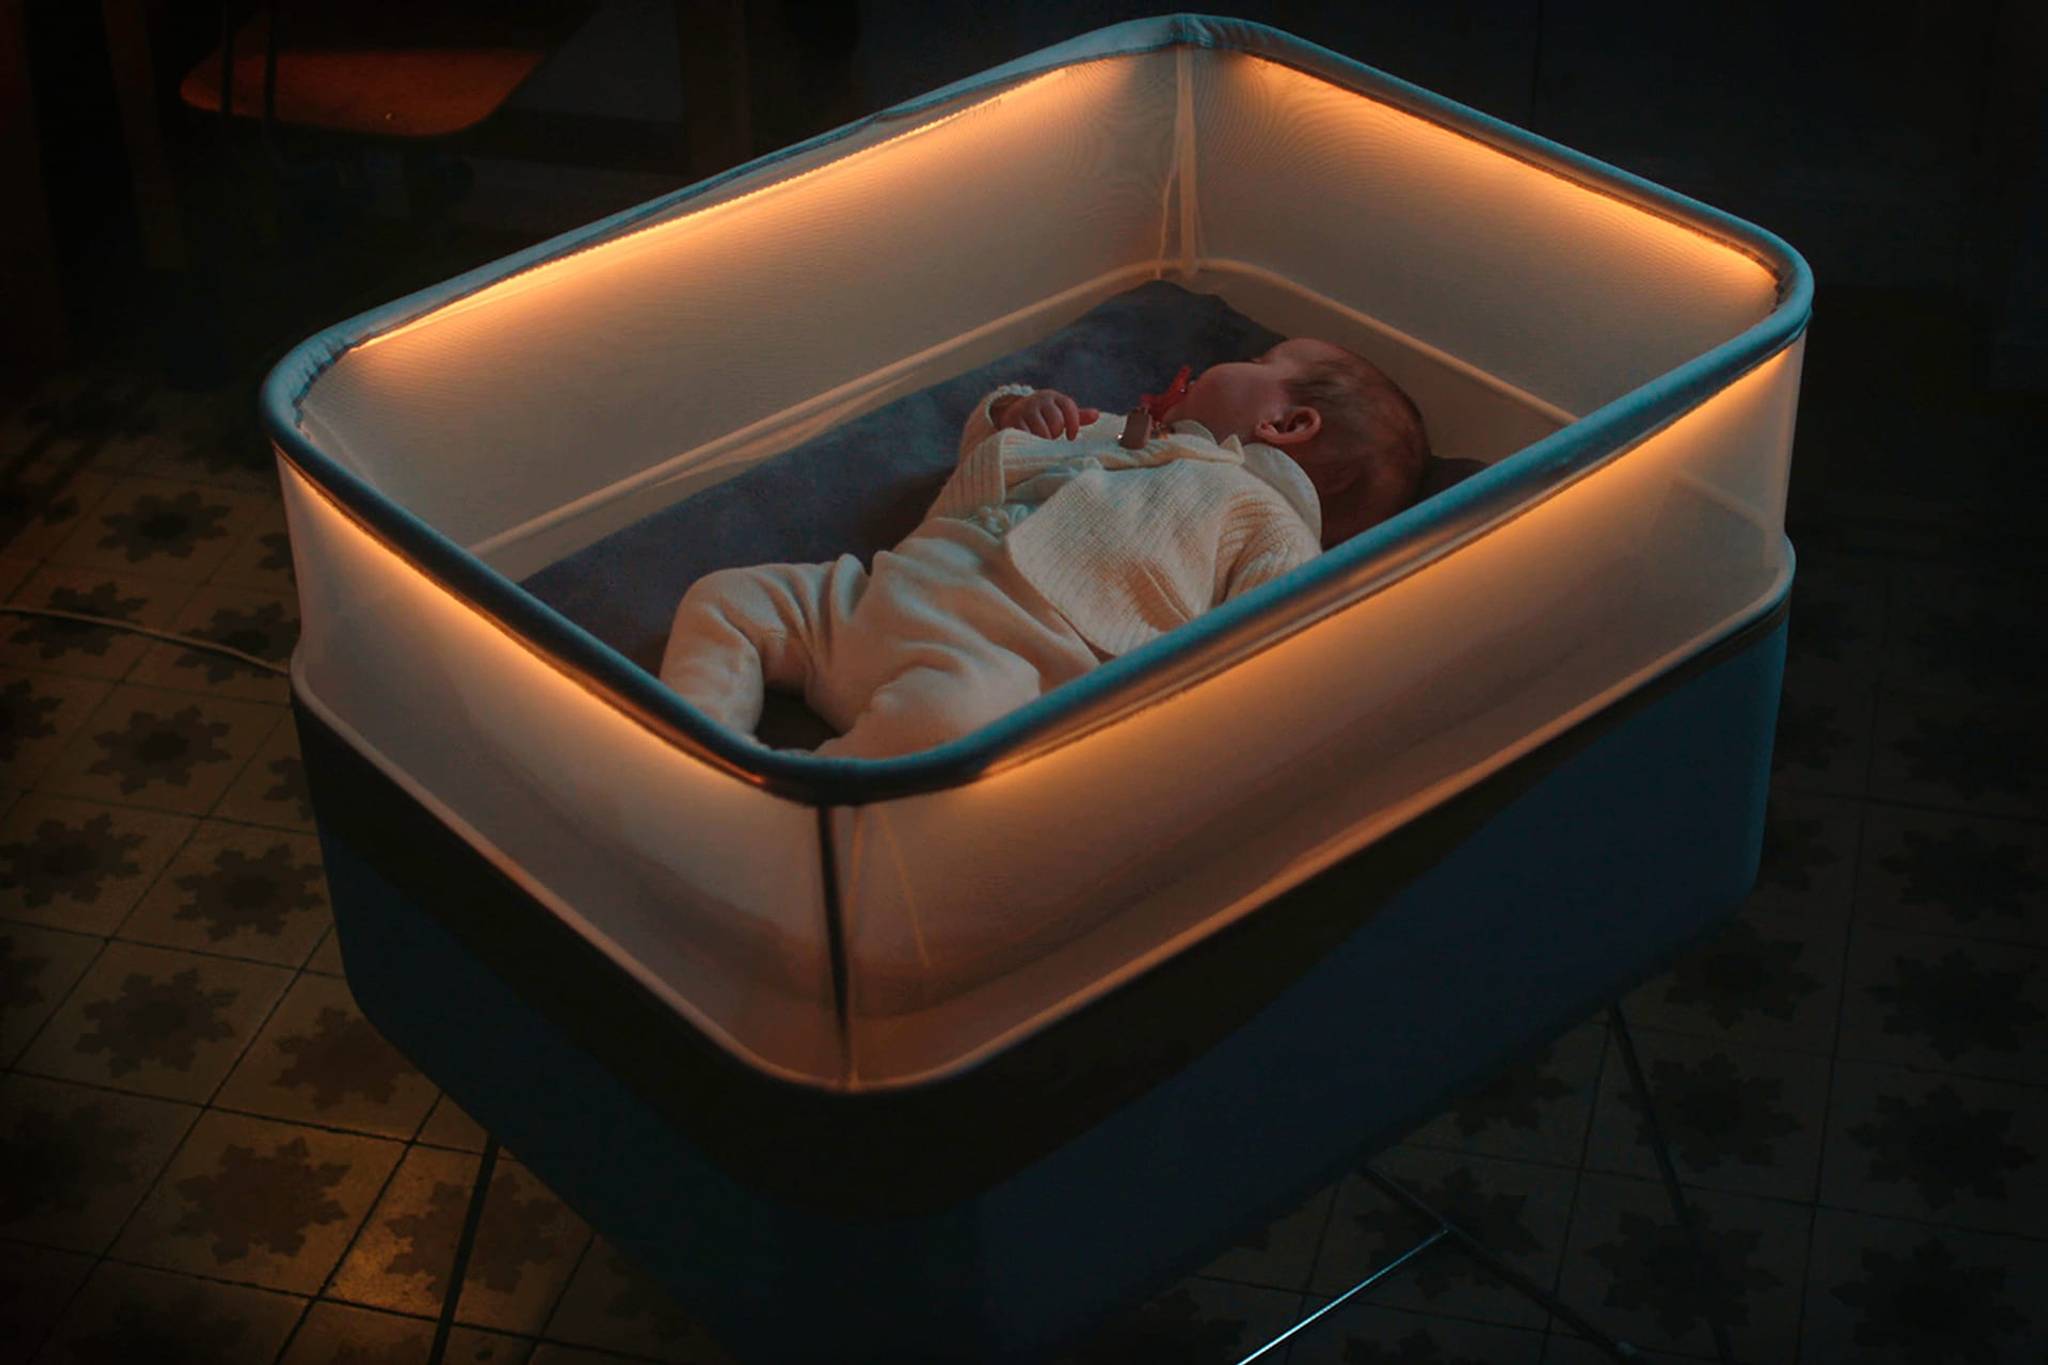 Ford’s smart crib mimics a carseat to help babies sleep